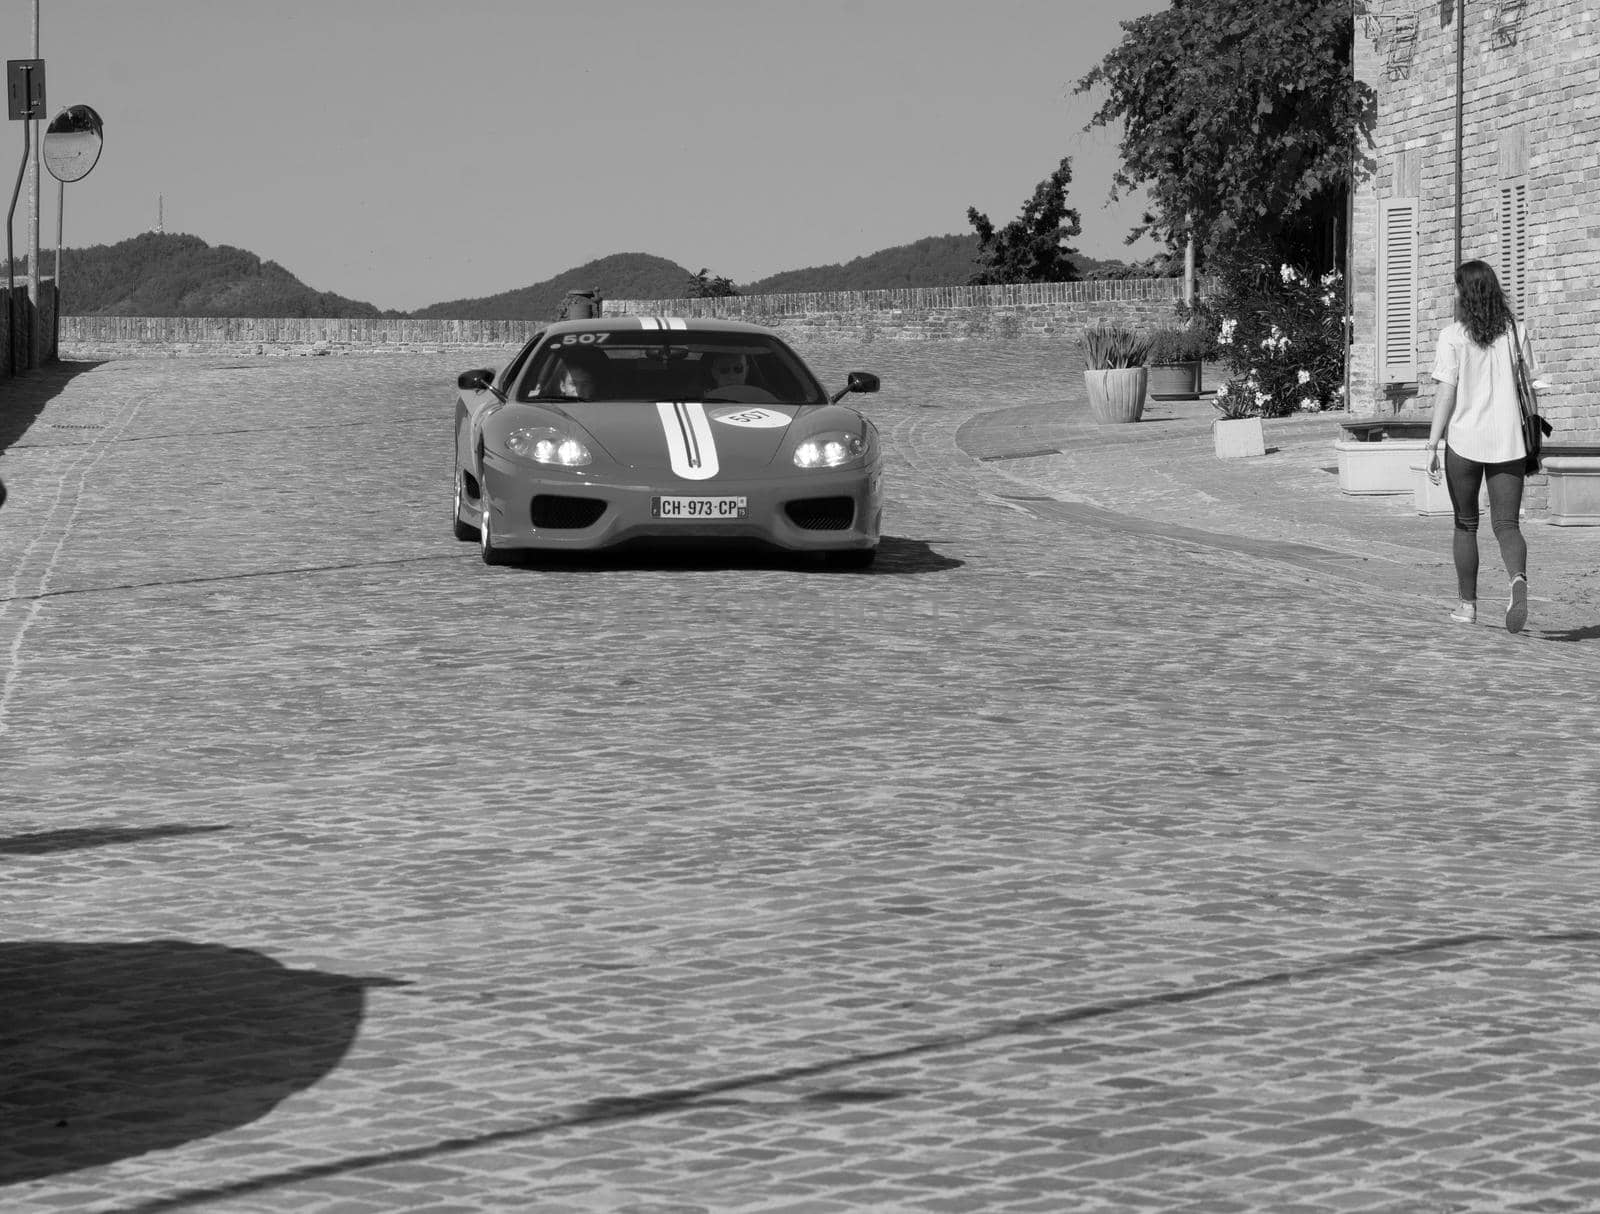 FERRARI TRIBUTE Ferrari MODENA IN an old racing car in rally Mille Miglia 2022 by massimocampanari